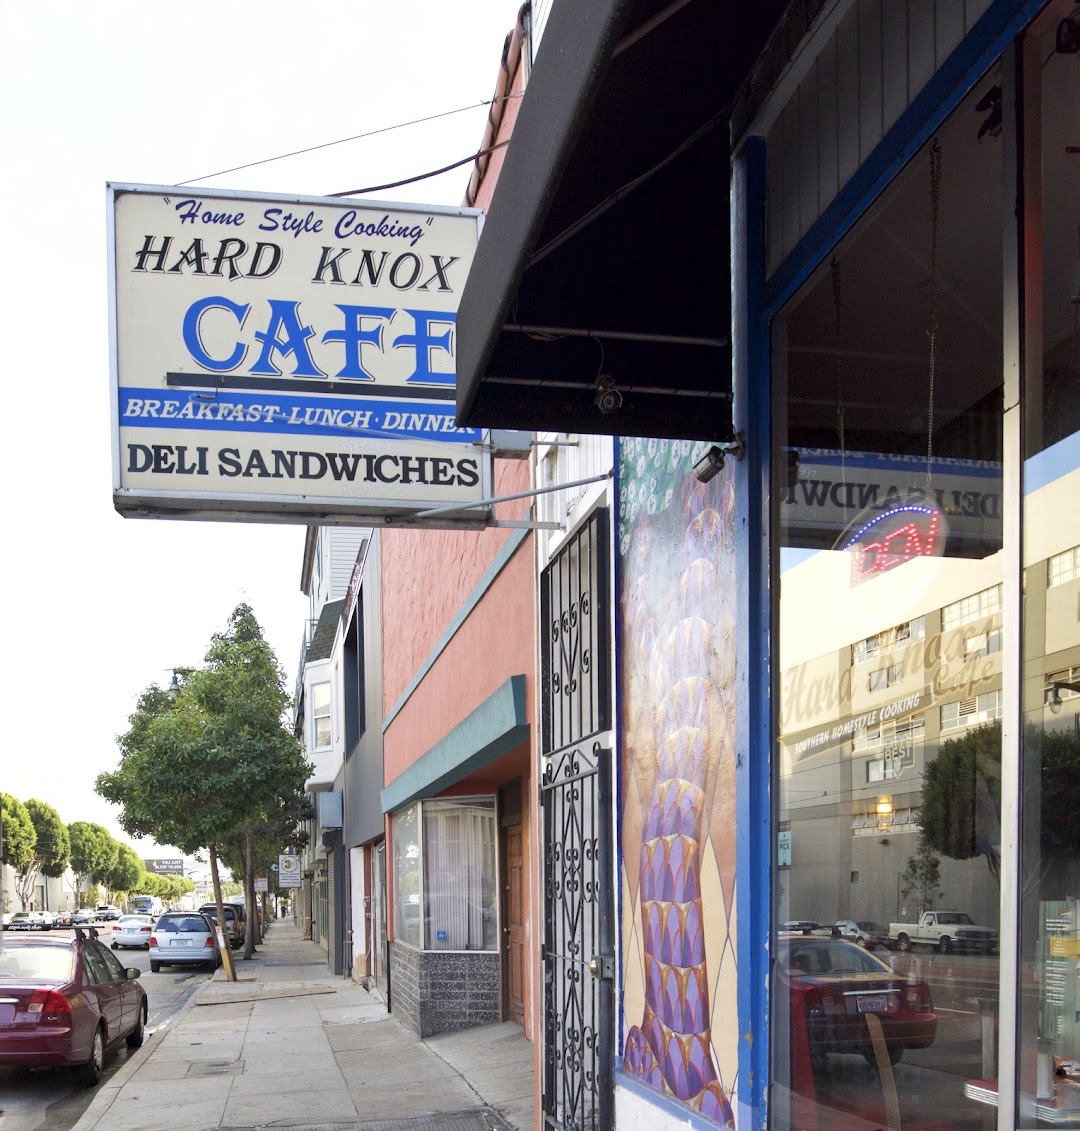 Hard Knox Cafe